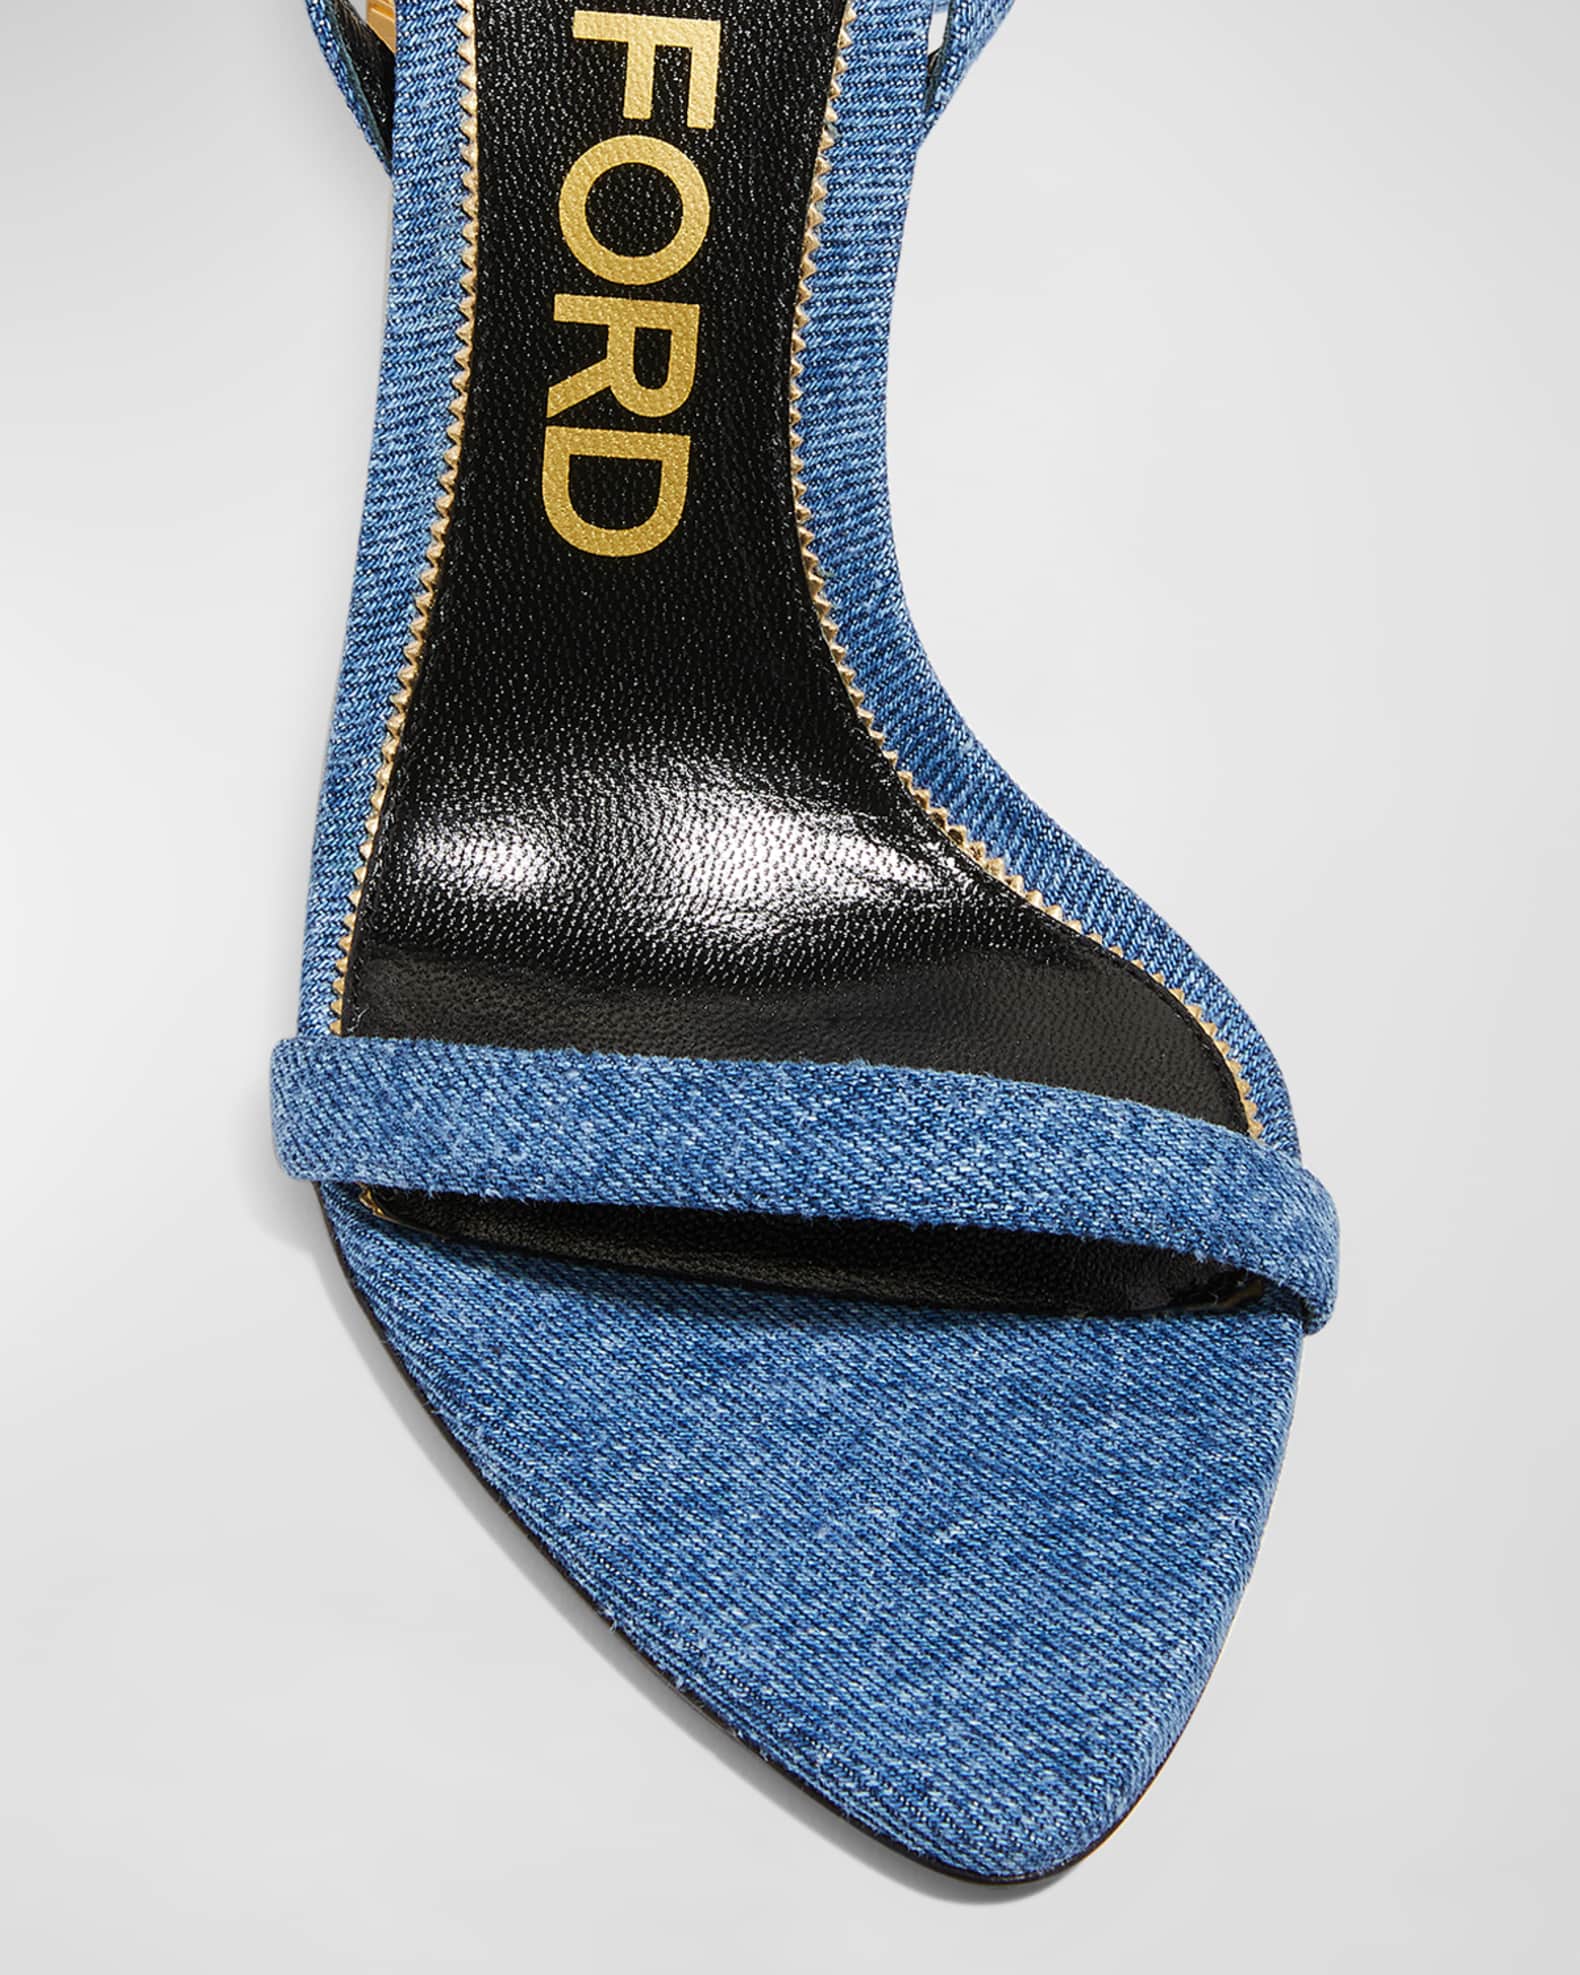 TOM FORD Denim Lock & Key Stiletto Sandals | Neiman Marcus